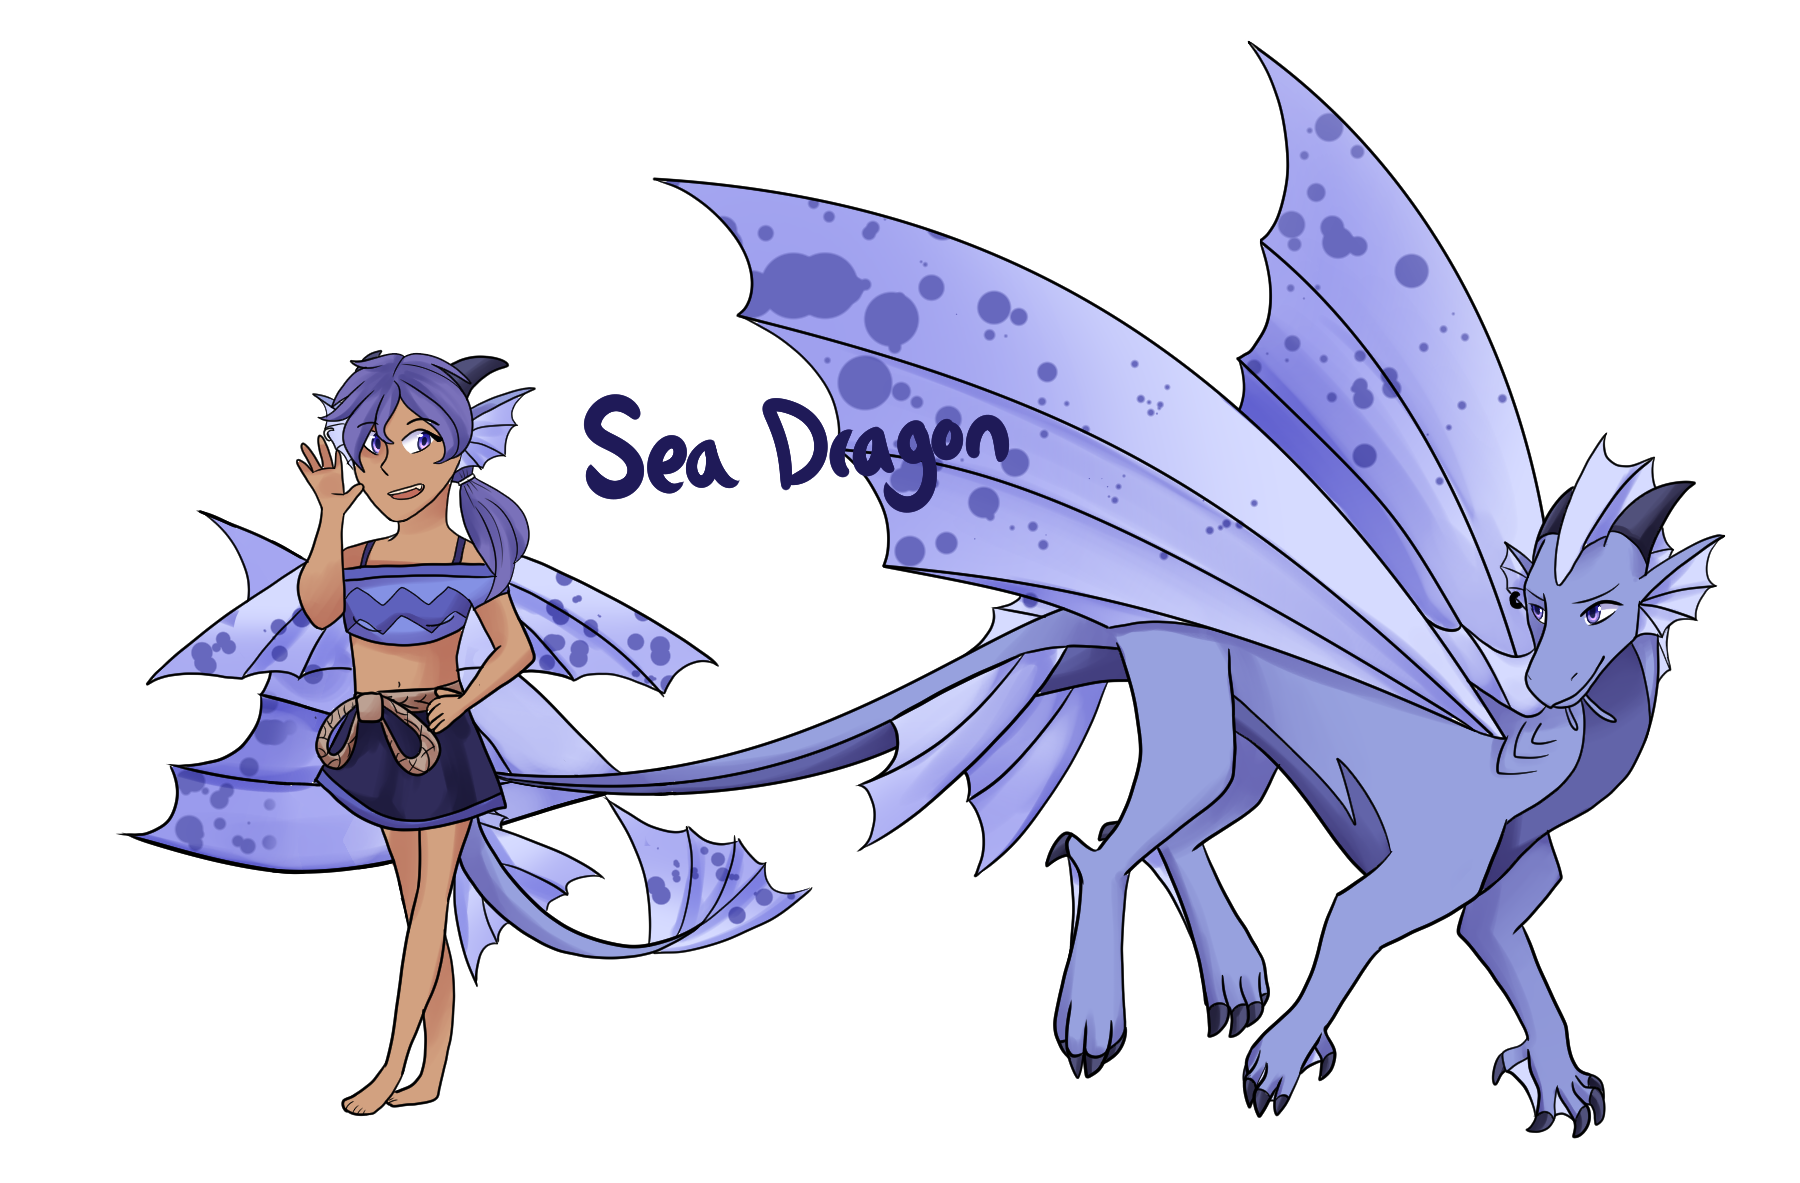 Uwu ocean dragon, her name is Clarissa